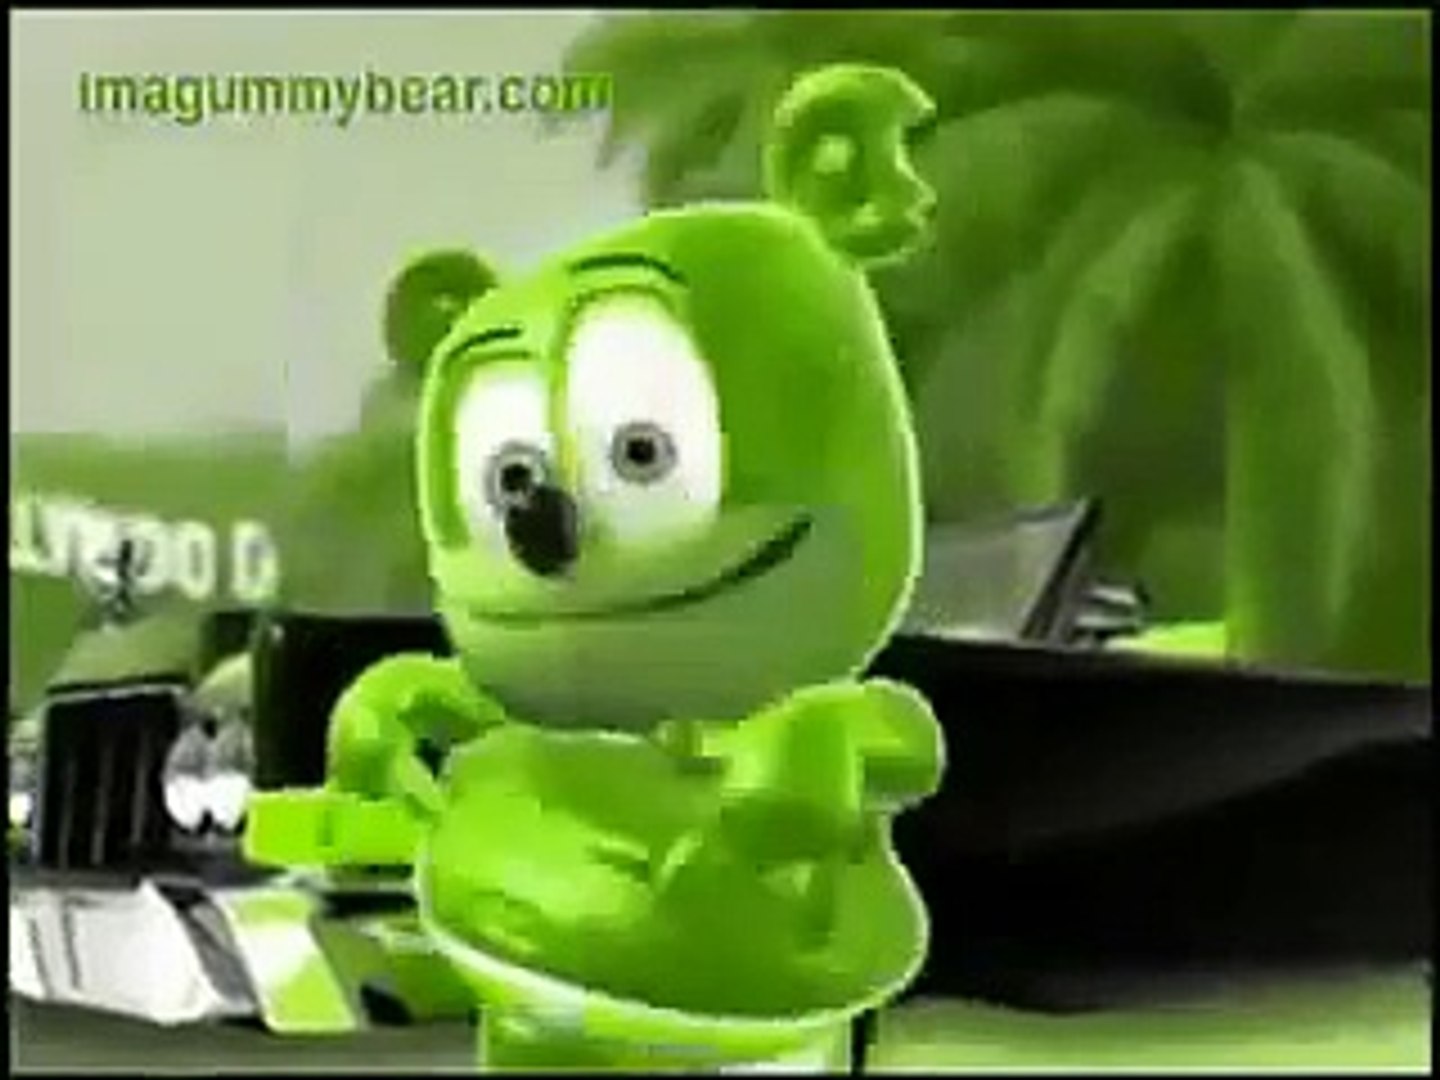 Gummy Bear - Gummy Bear Song